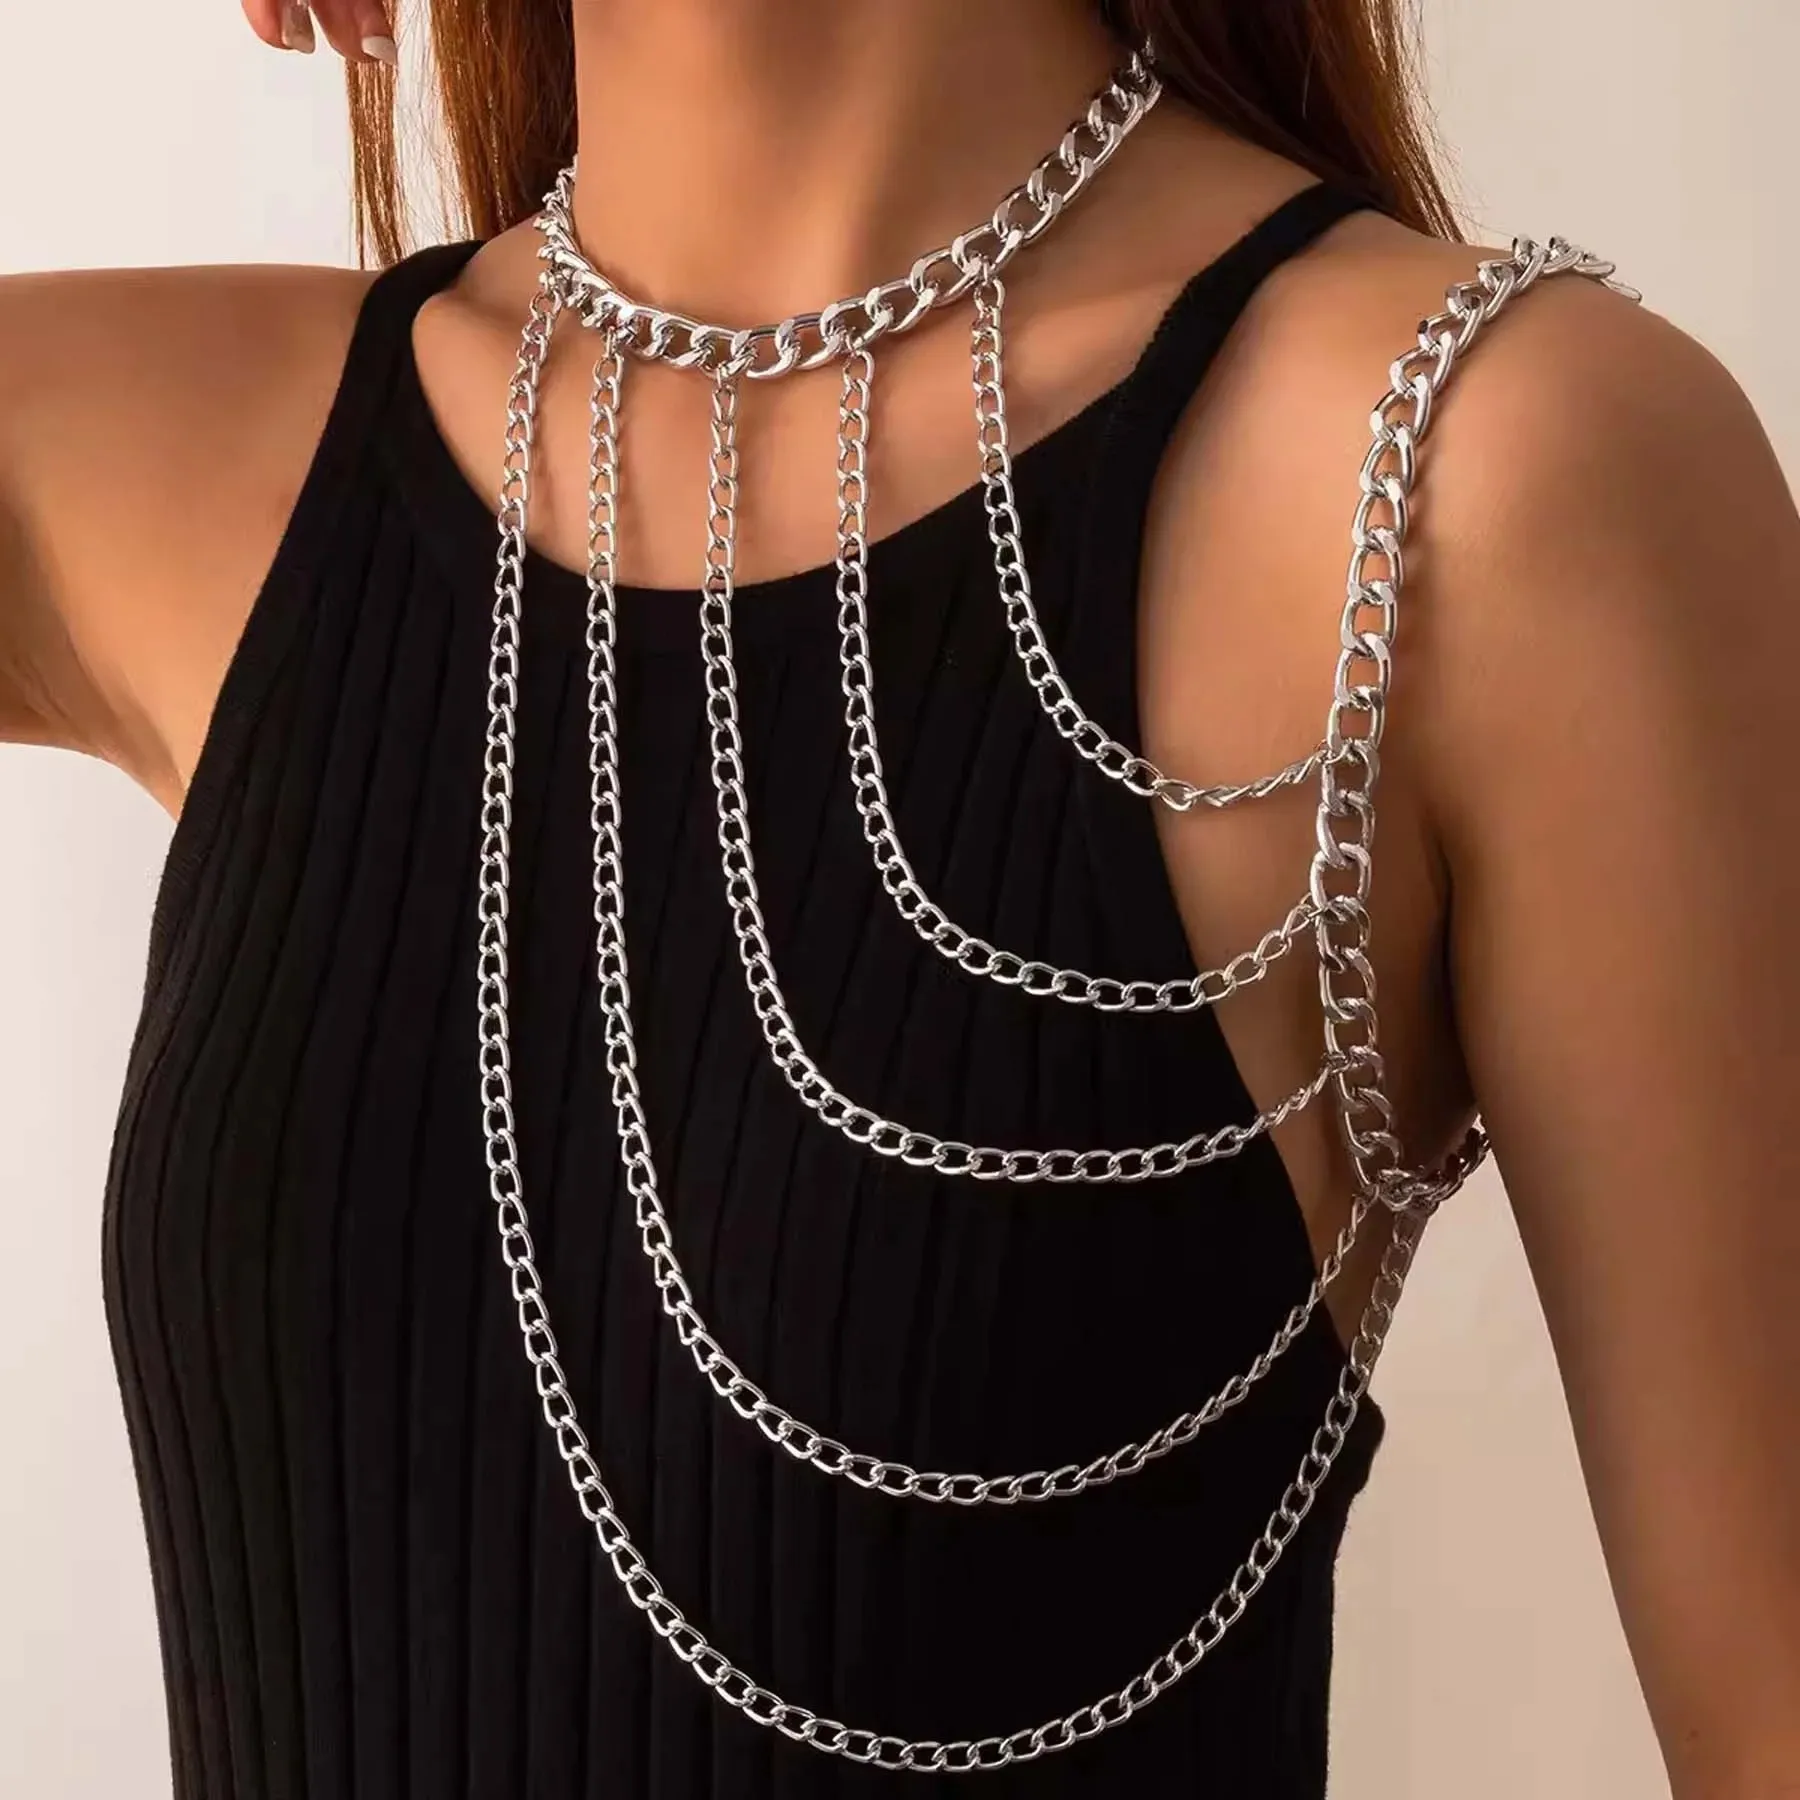 Gold Silver Multi-Layer Alloy Cross Chain Shoulder Chain Body Jewelry Women Sex Jewelry